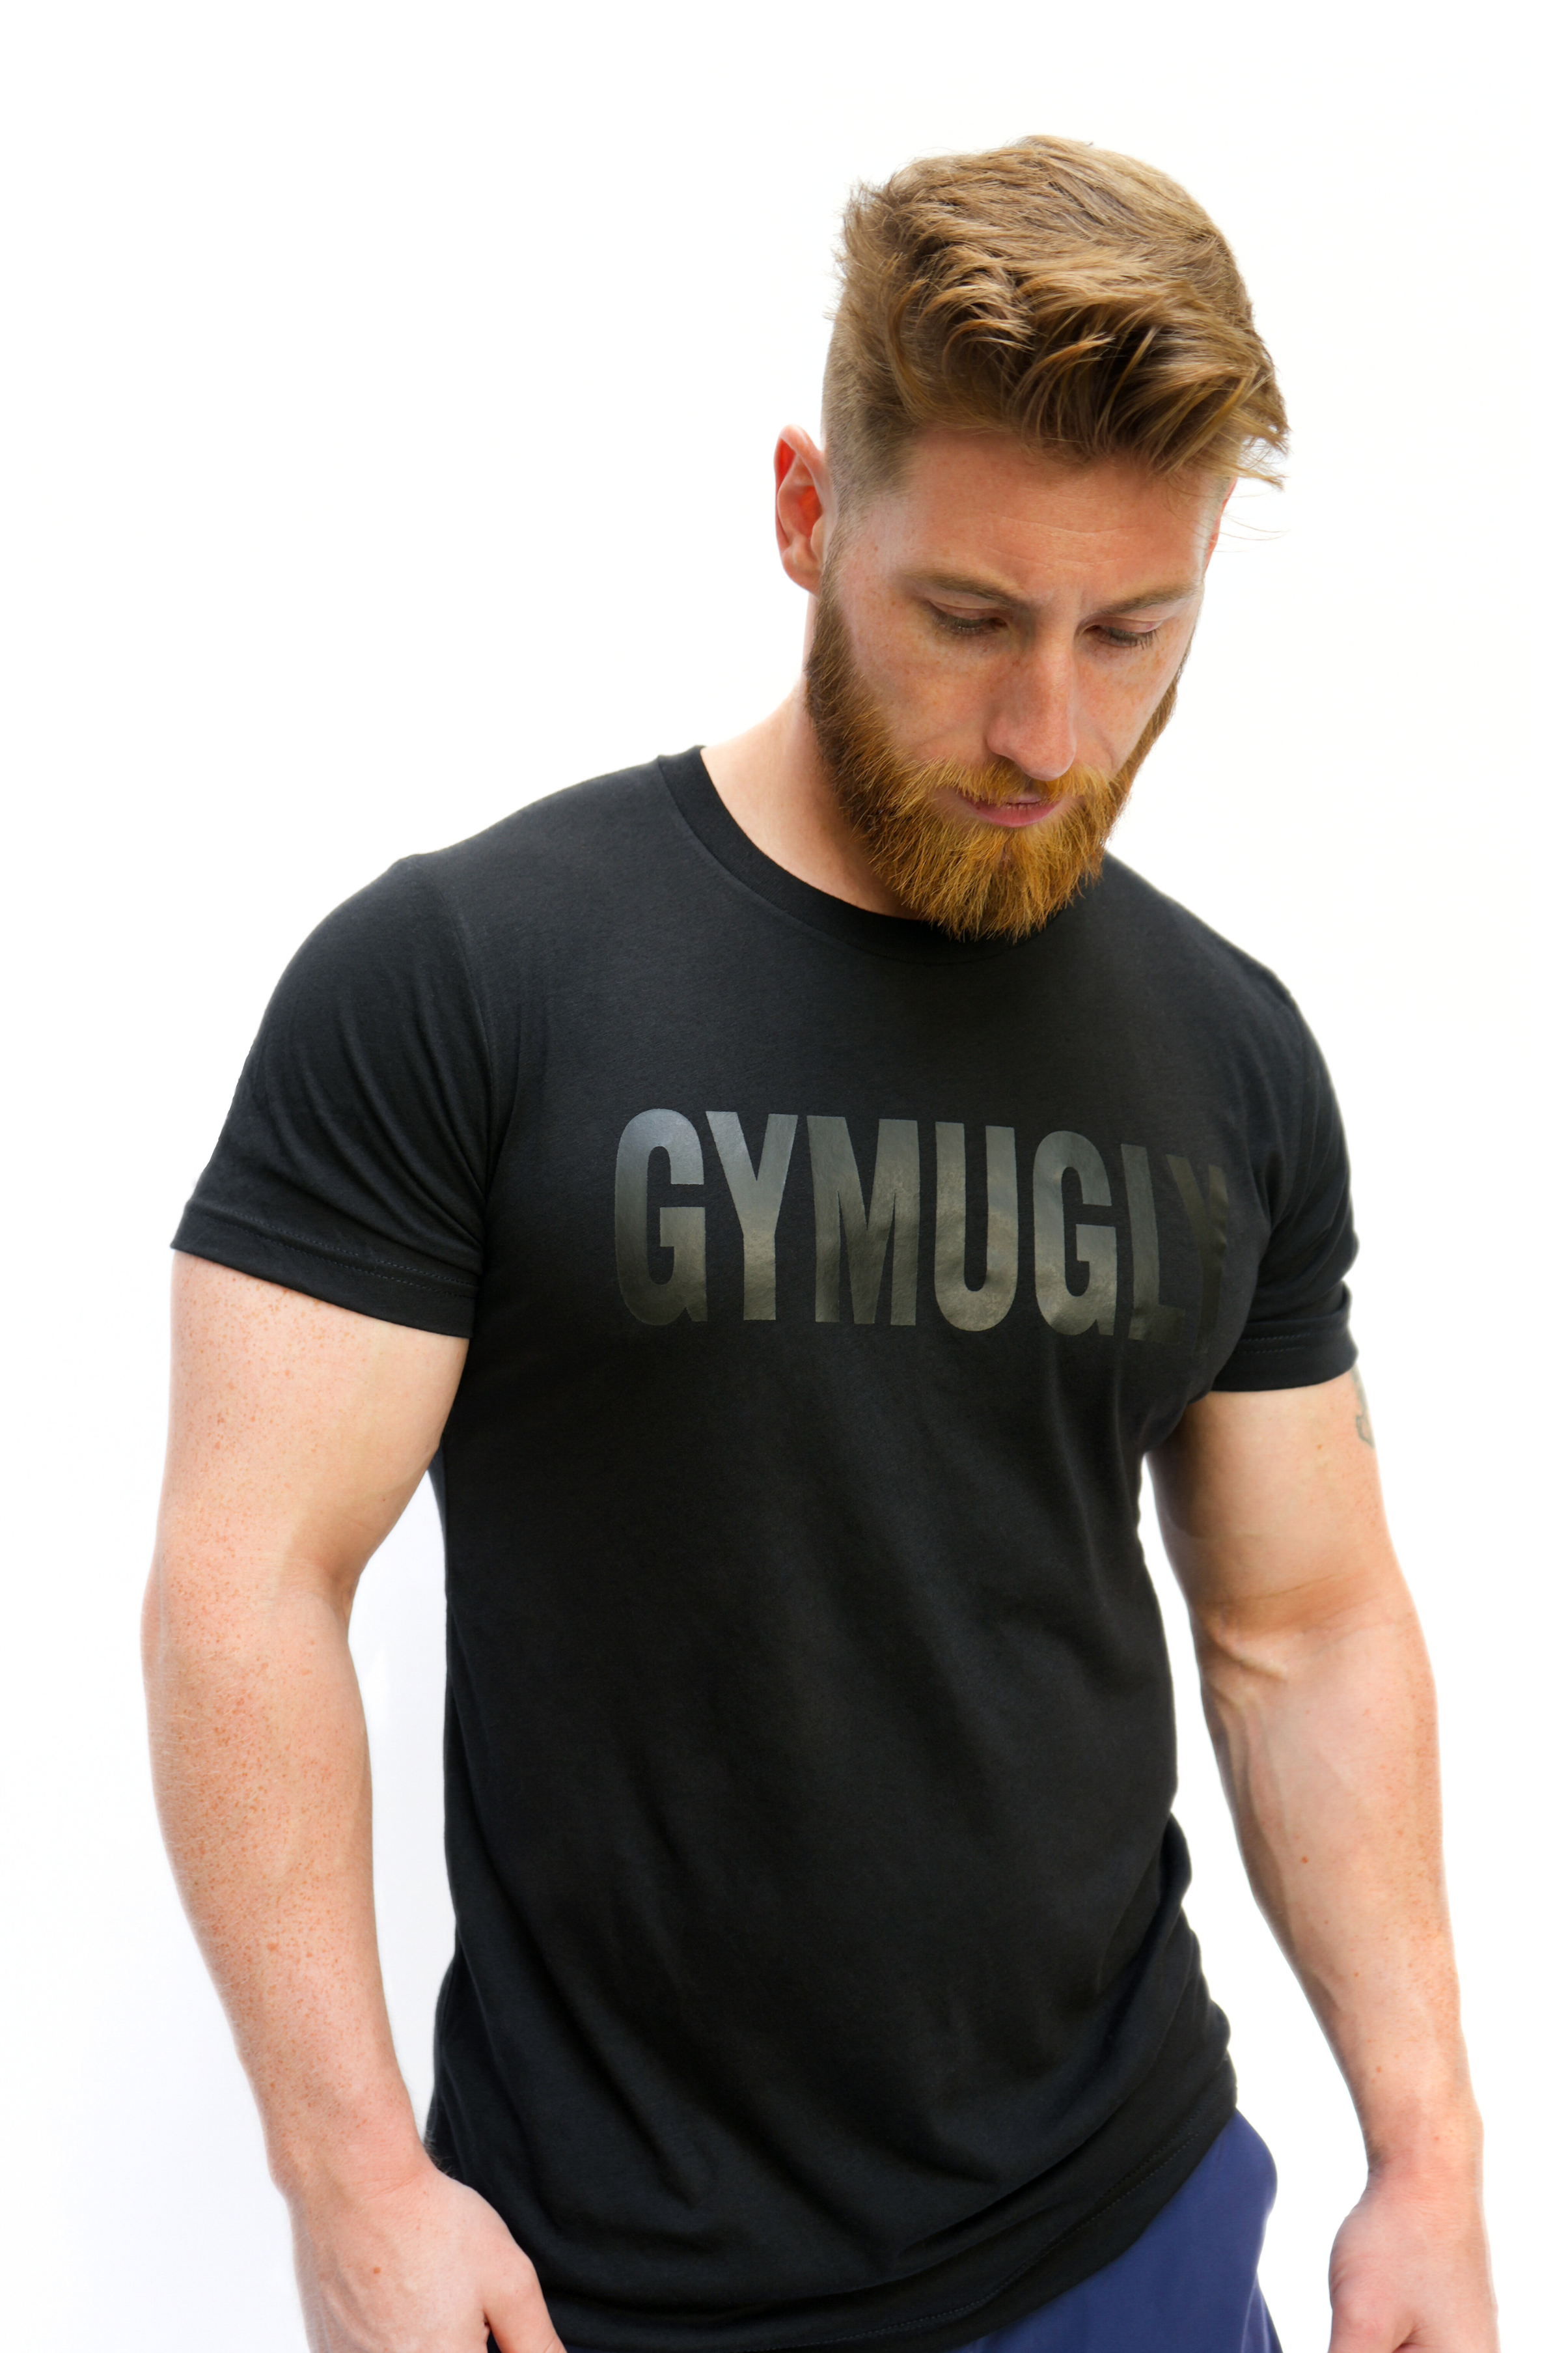 Gym Ugly Midnight T-Shirt